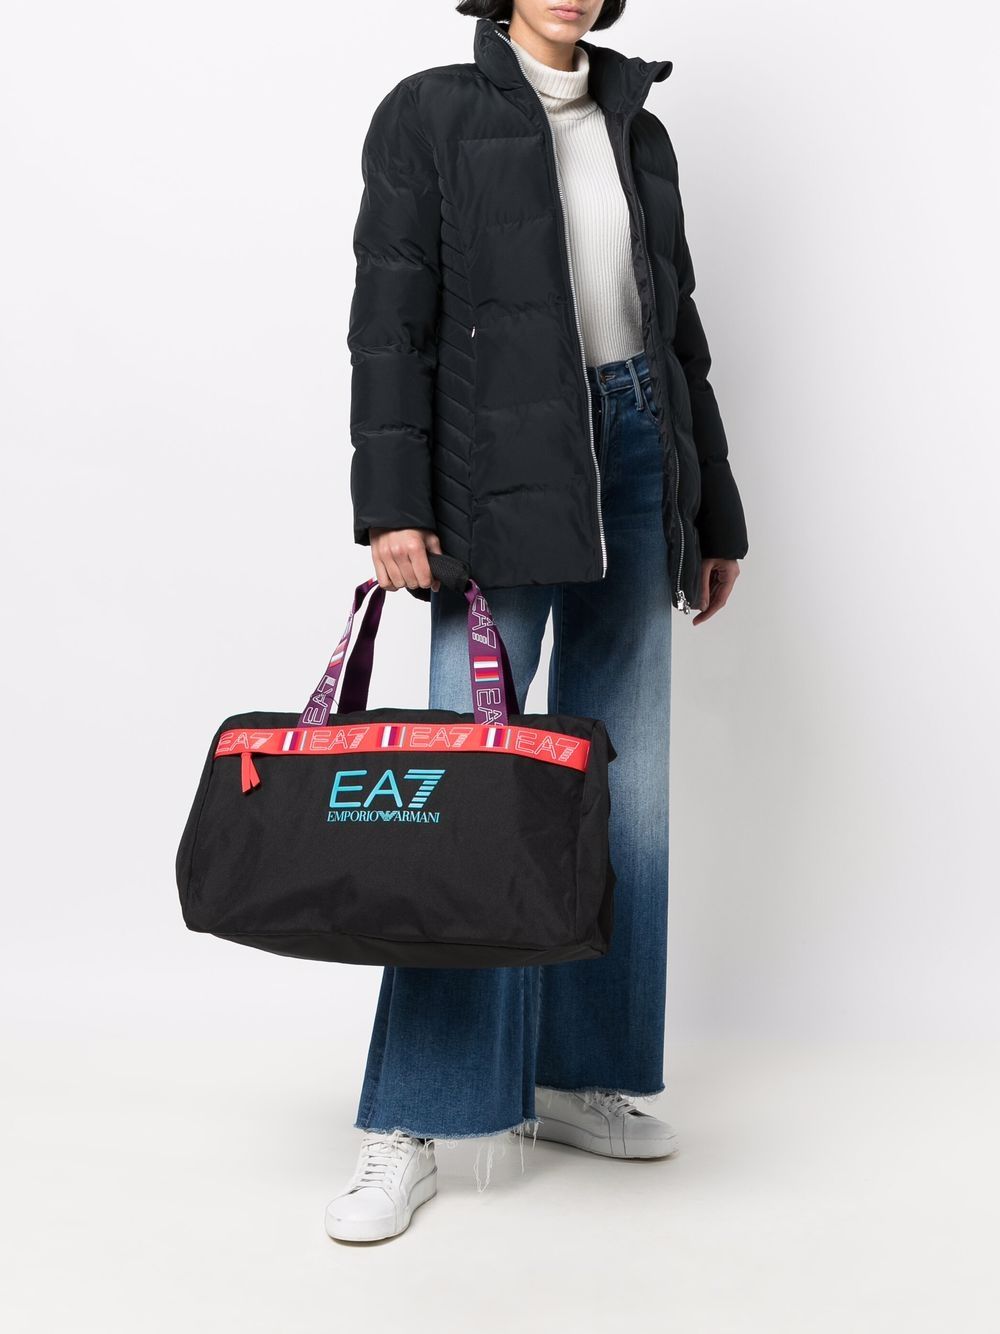 фото Ea7 emporio armani дорожная сумка с логотипом